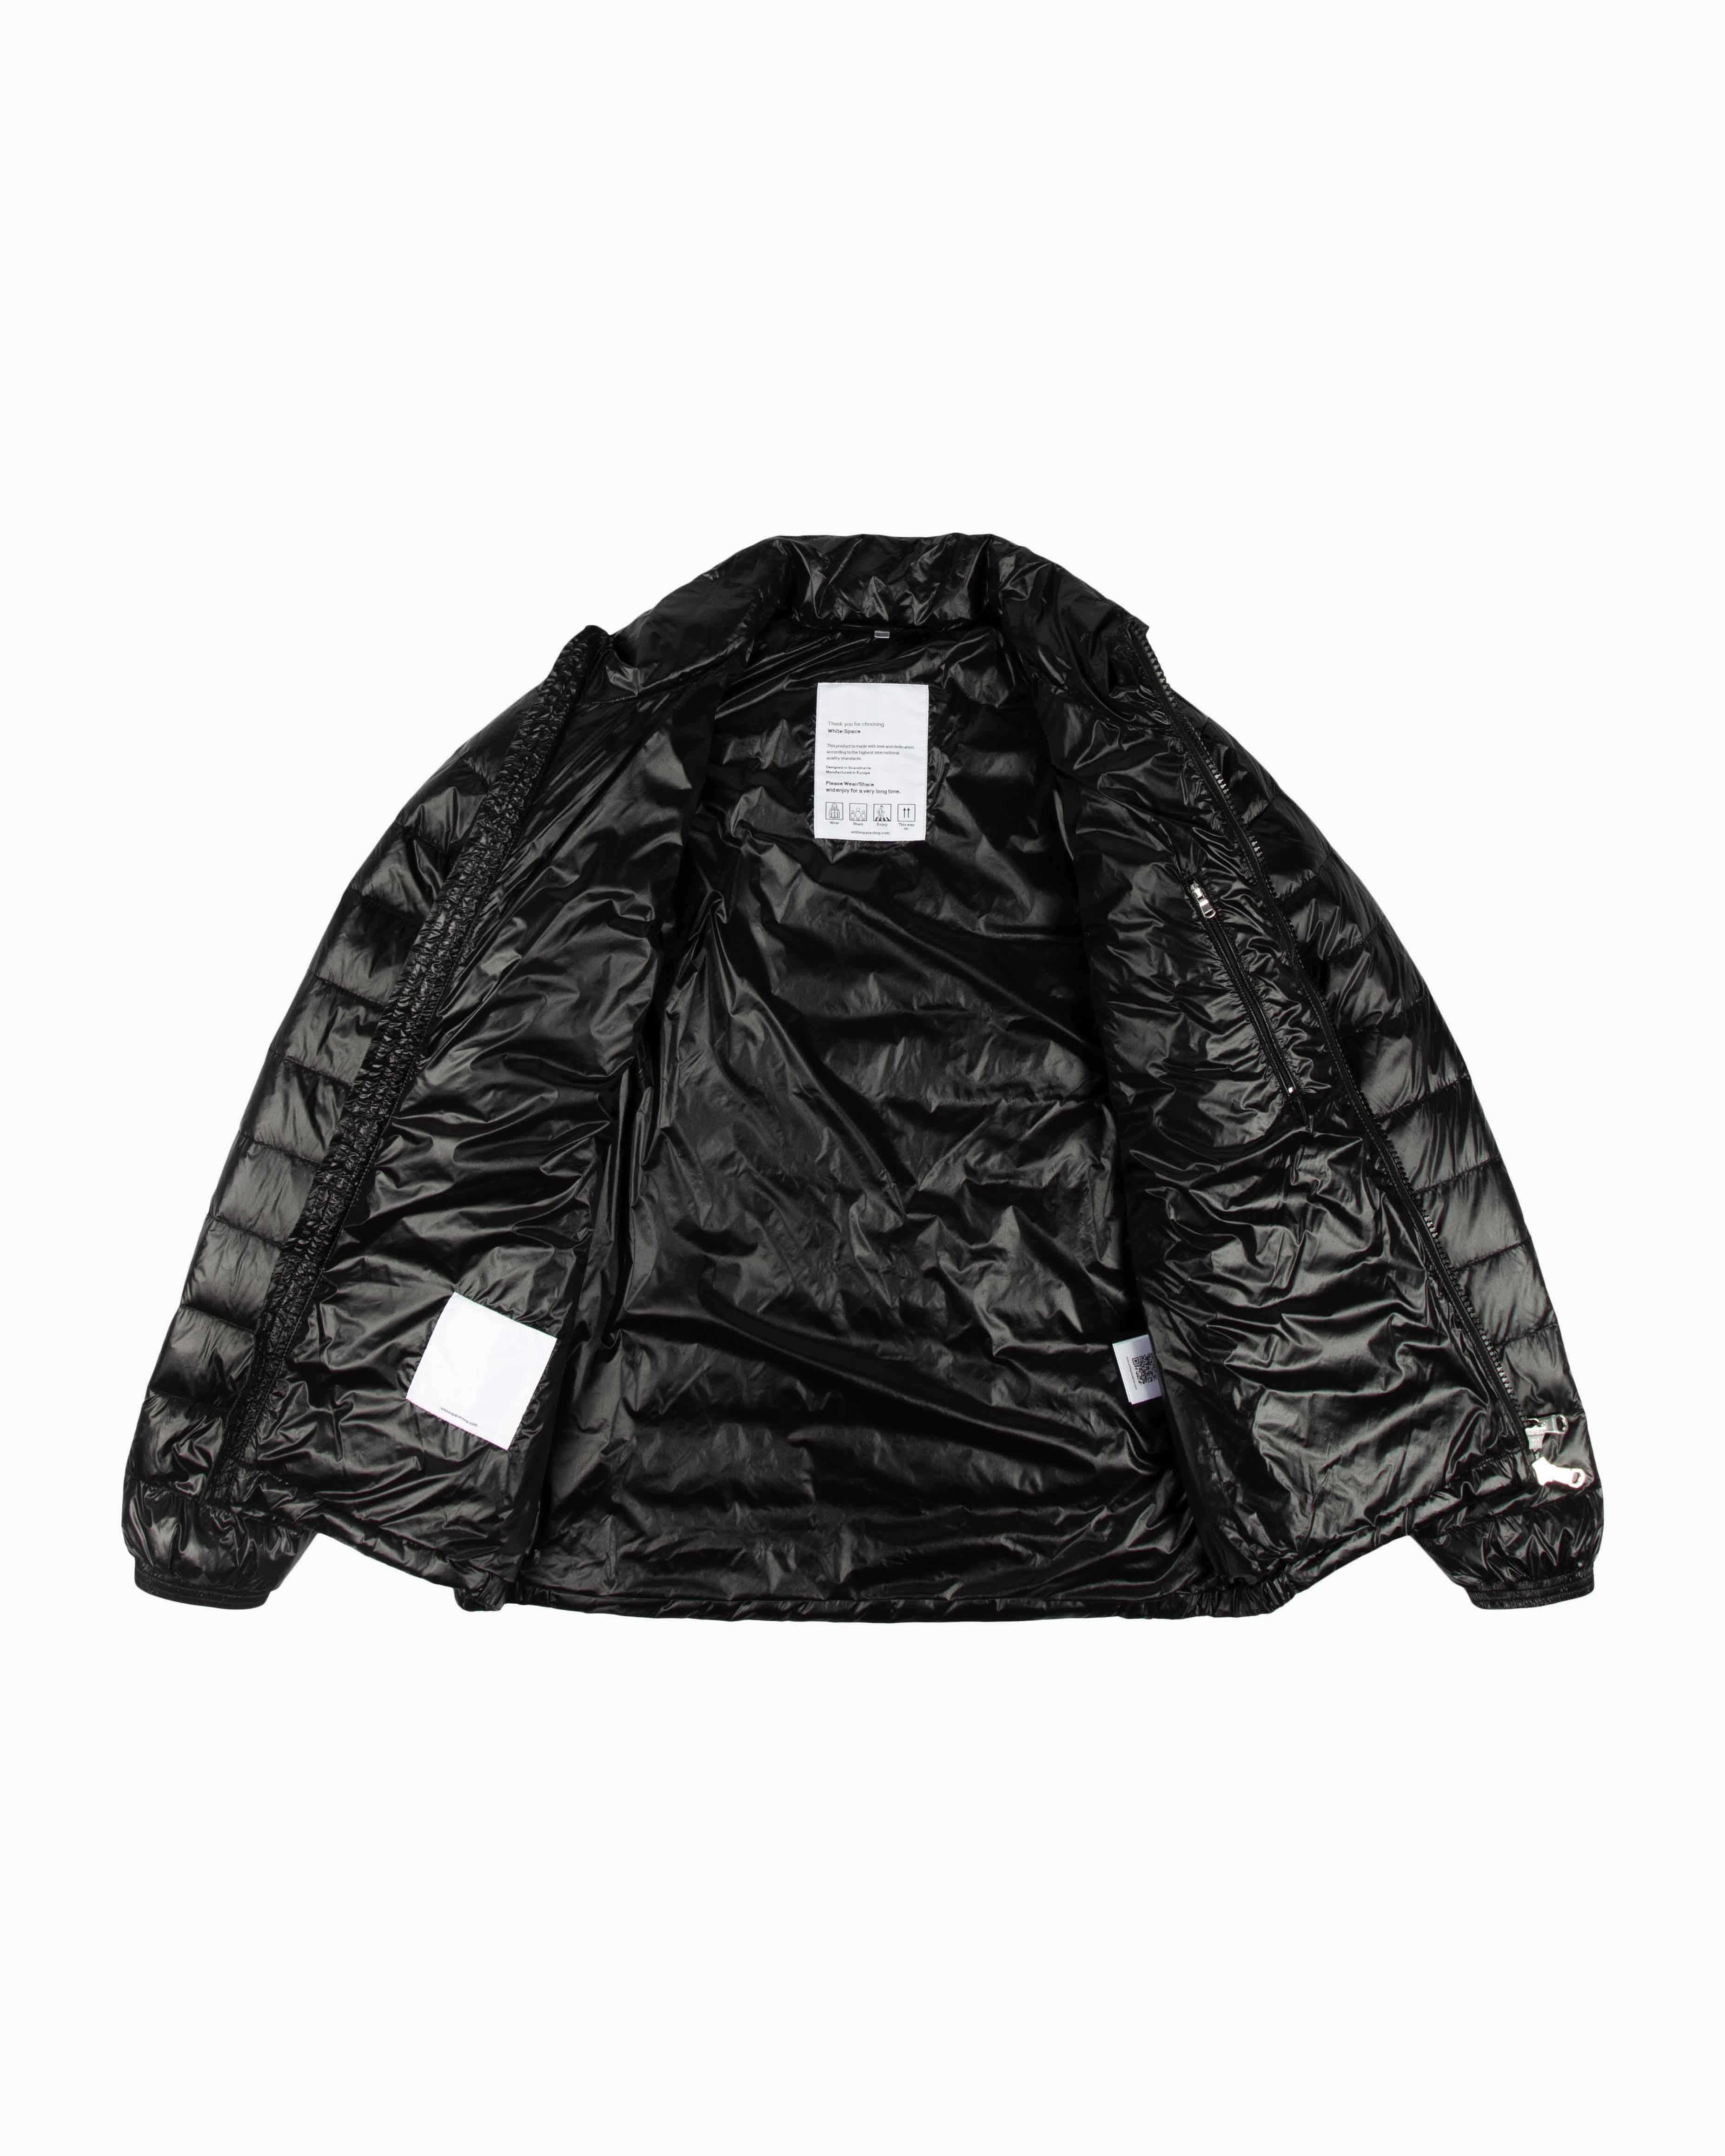 Tate Jacket White:Space Outerwear Jackets Black